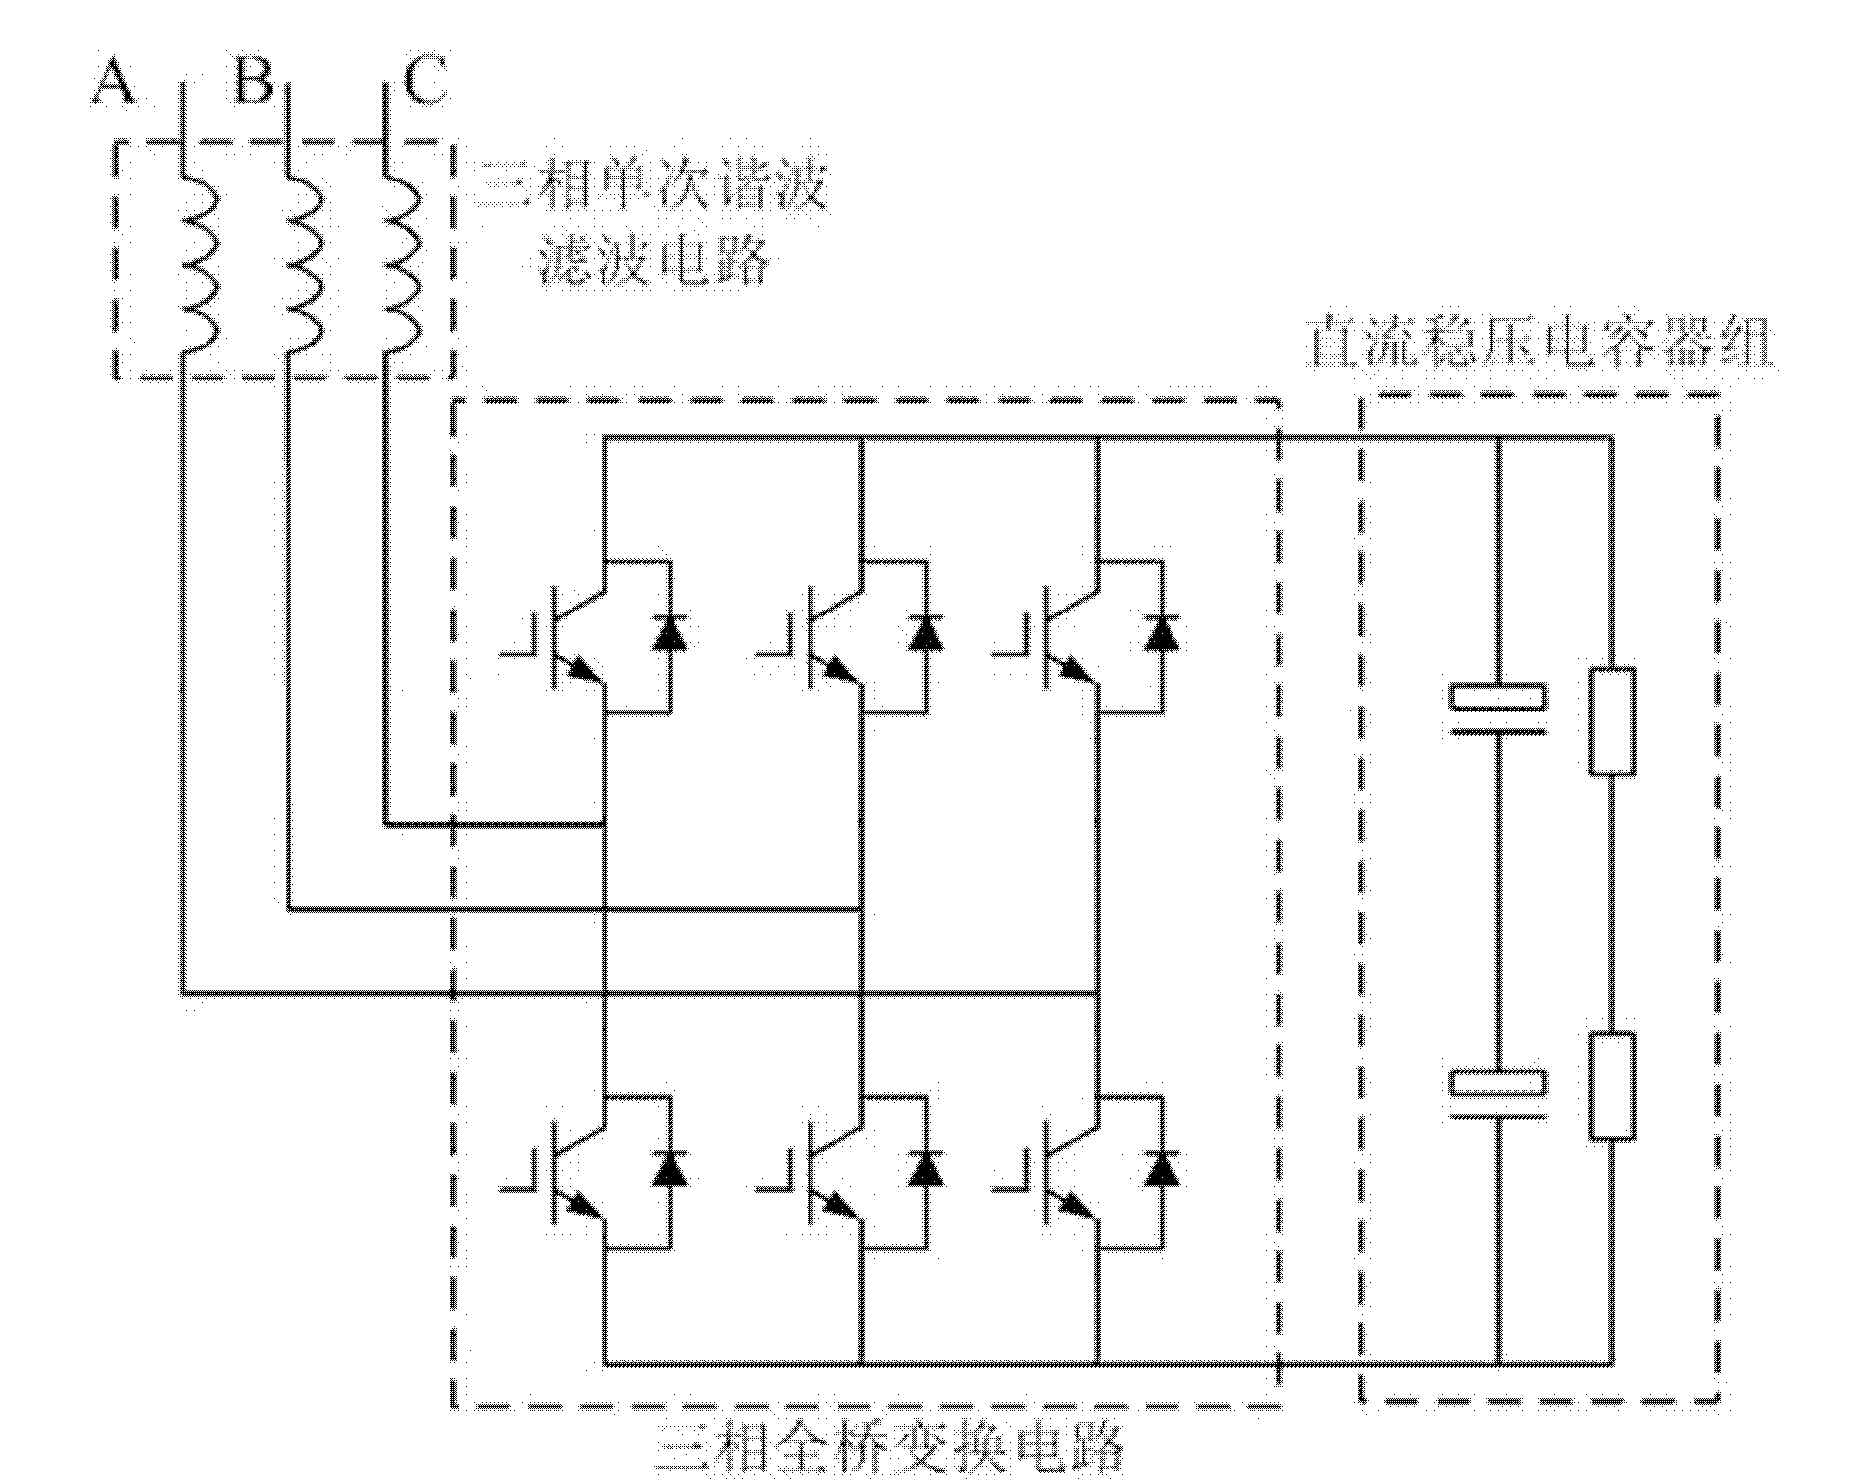 Harmonic current counteracting module